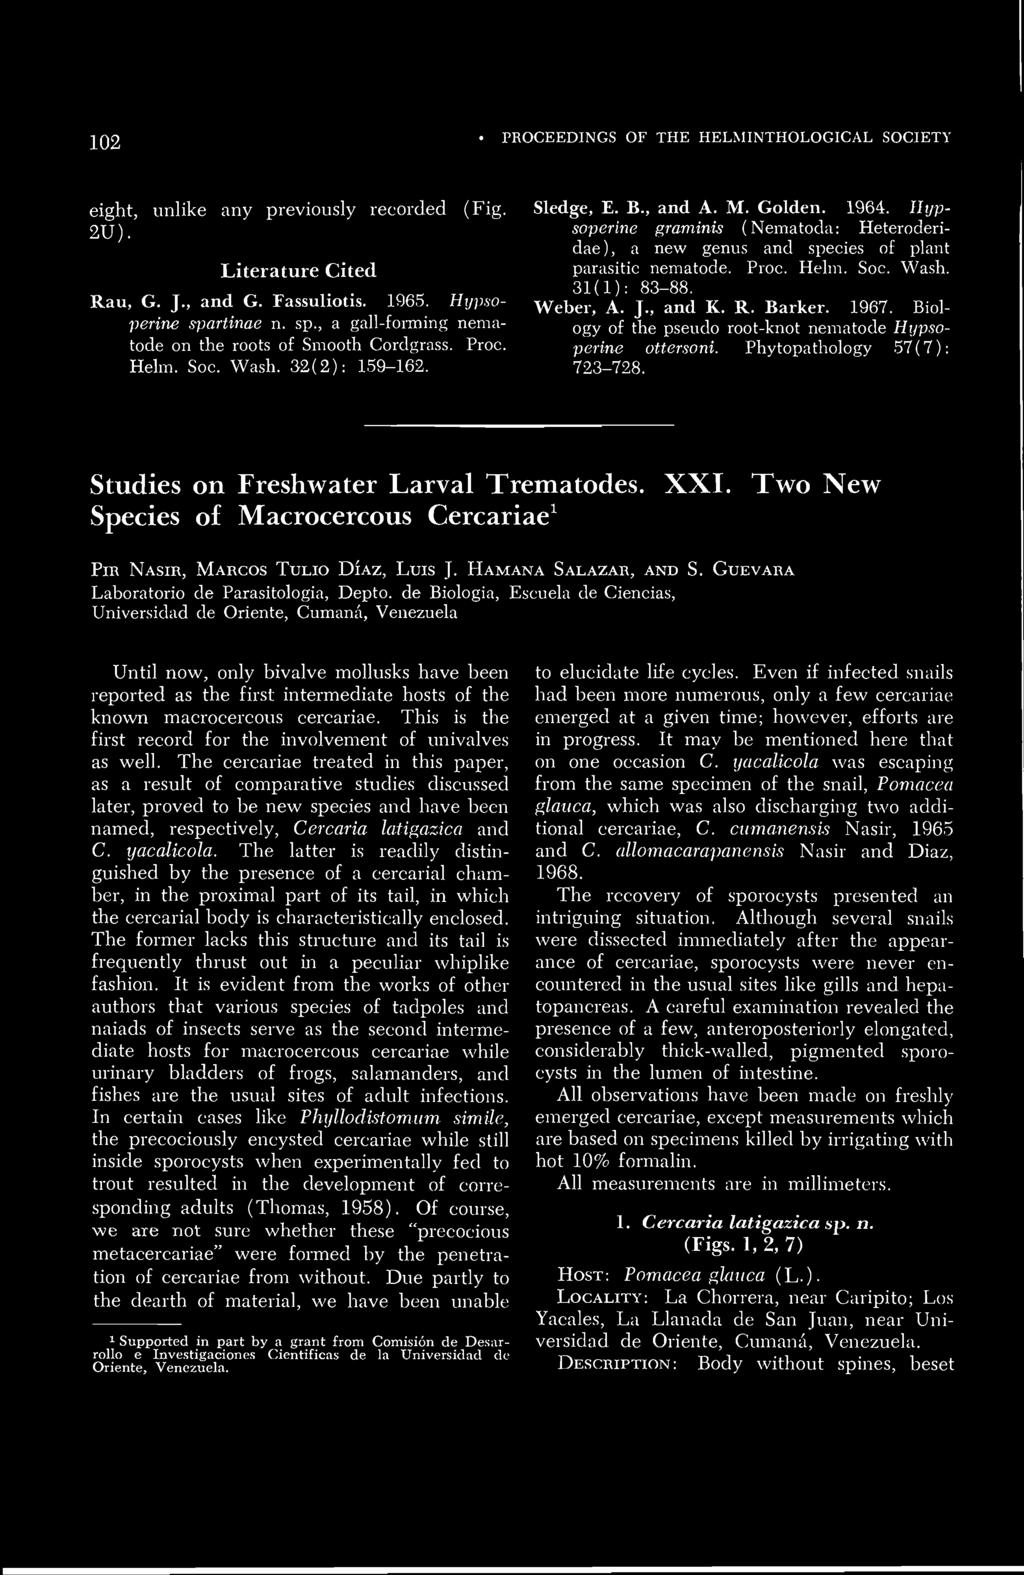 Weber, A. J., and K. R. Barker. 1967. Biology of the pseudo root-knot nematode Hijpsoperine ottersoni. Phytopathology 57(7): 723-728. Studies on Freshwater Larval Trematodes. XXI.